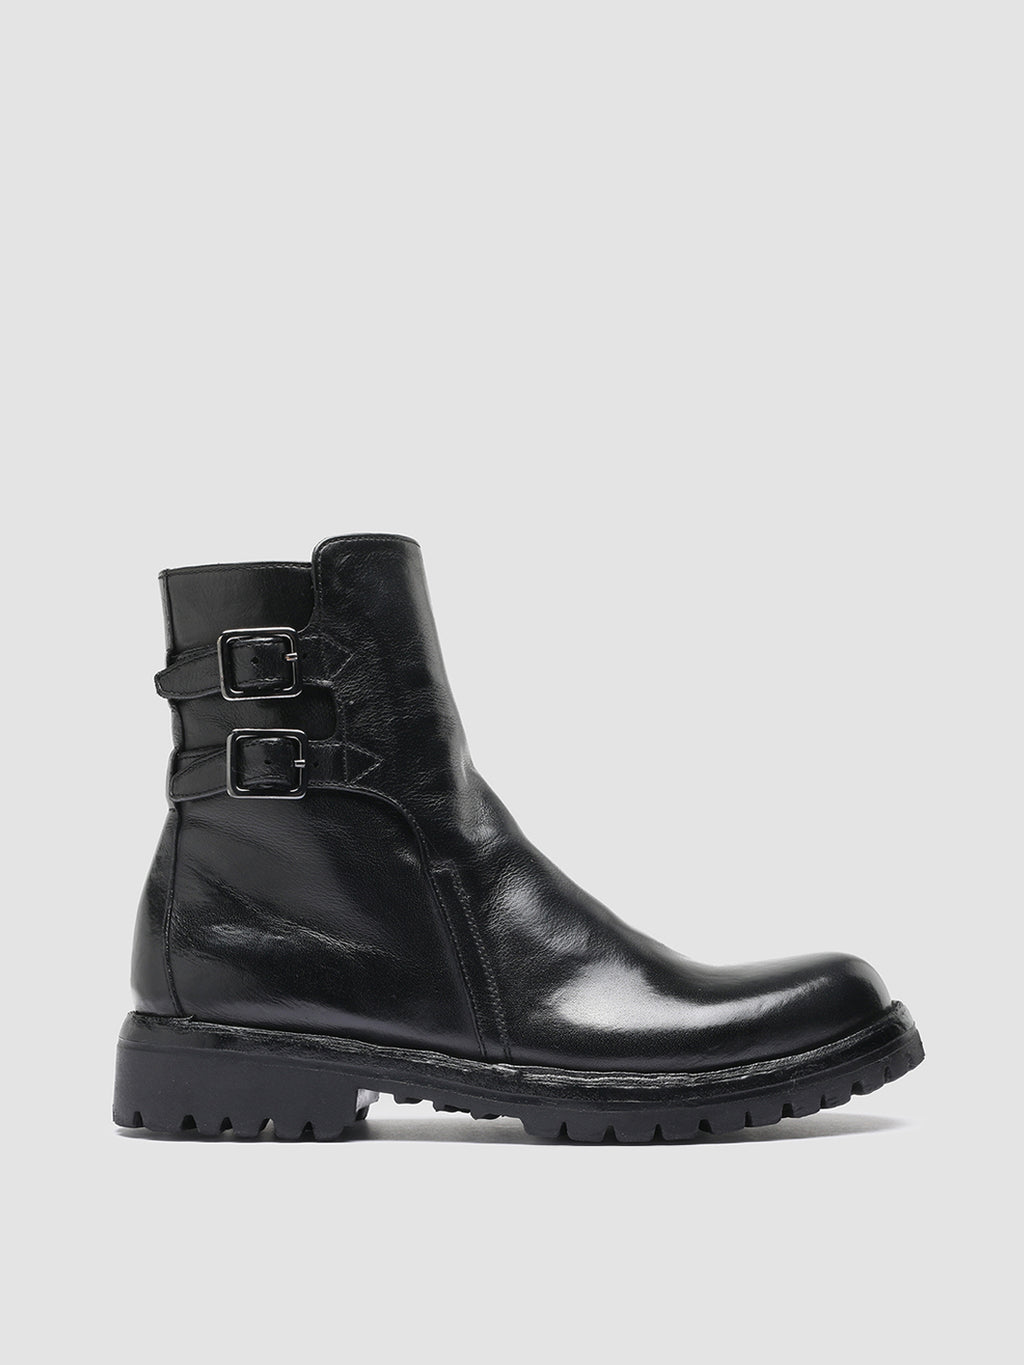 LORAINE 002 Nero - Black Leather Ankle Boots Women Officine Creative - 1